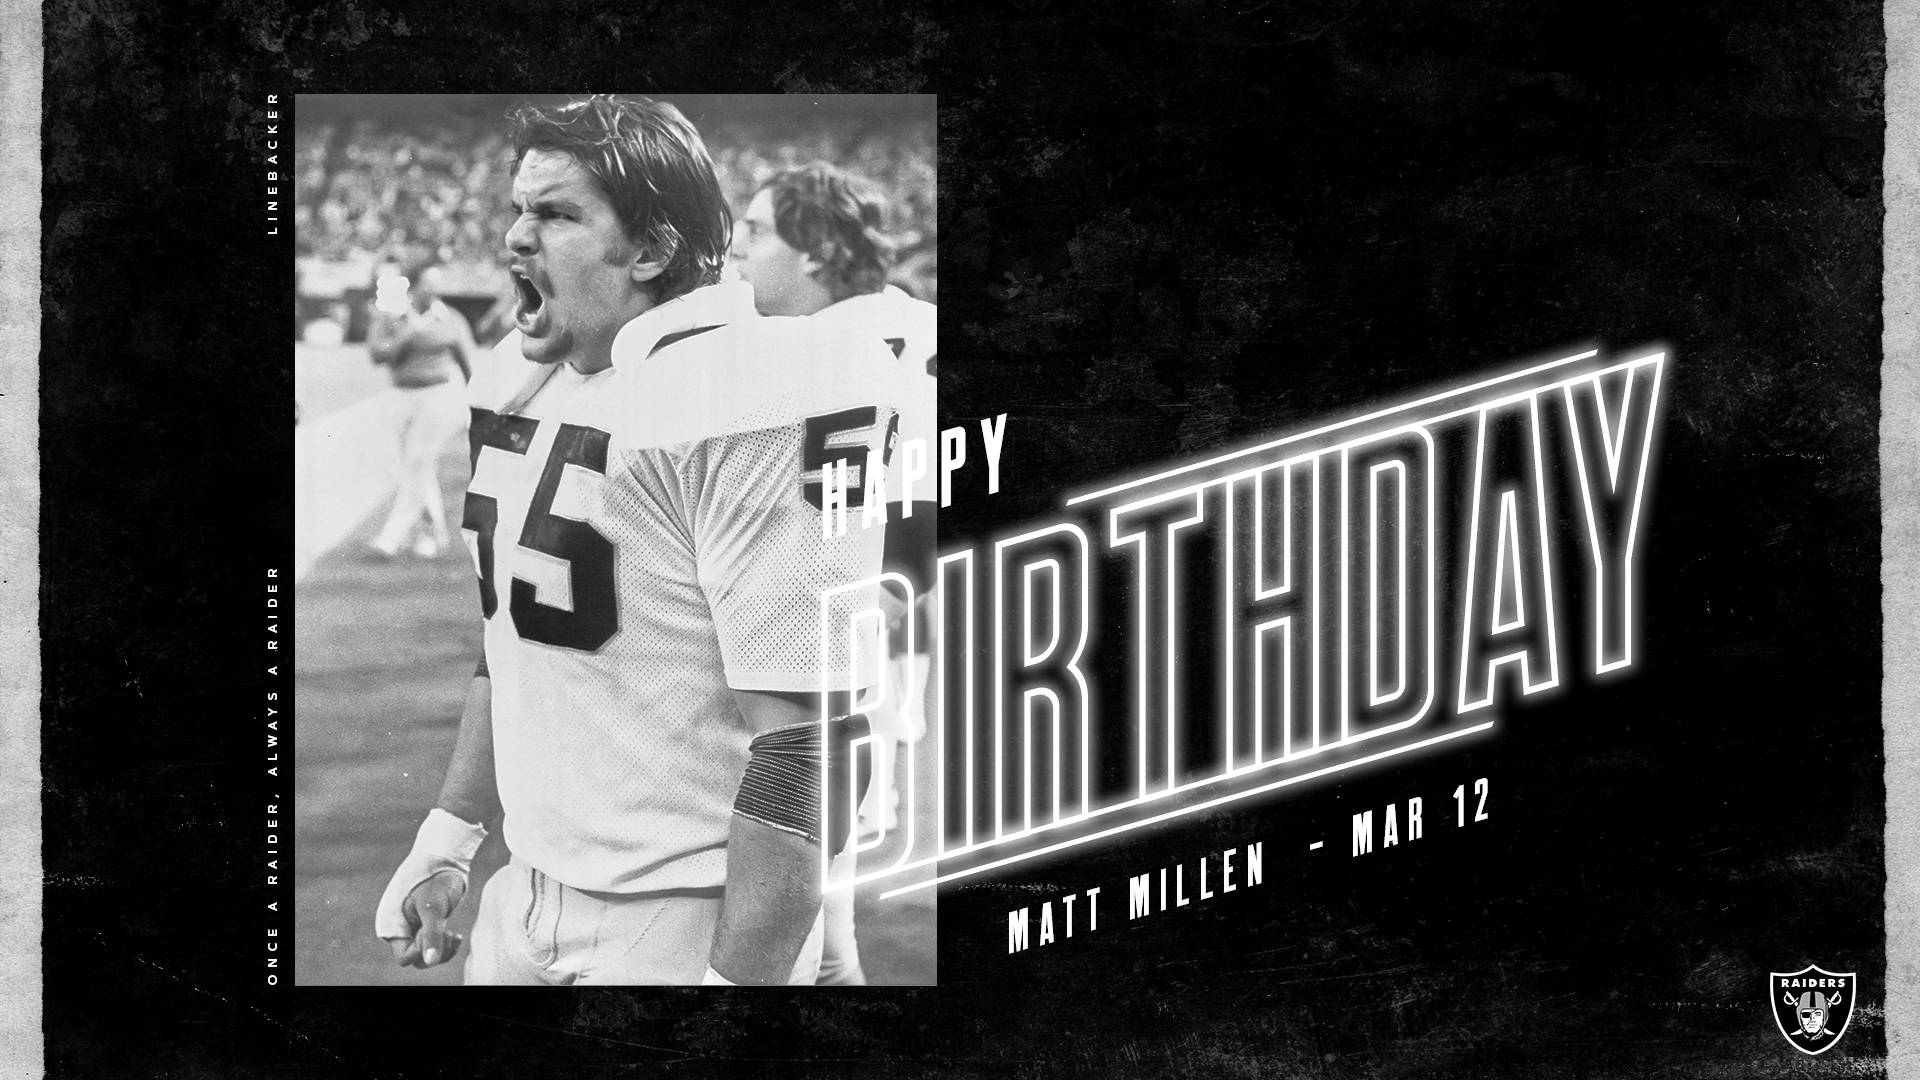 Happy birthday, Matt Millen 